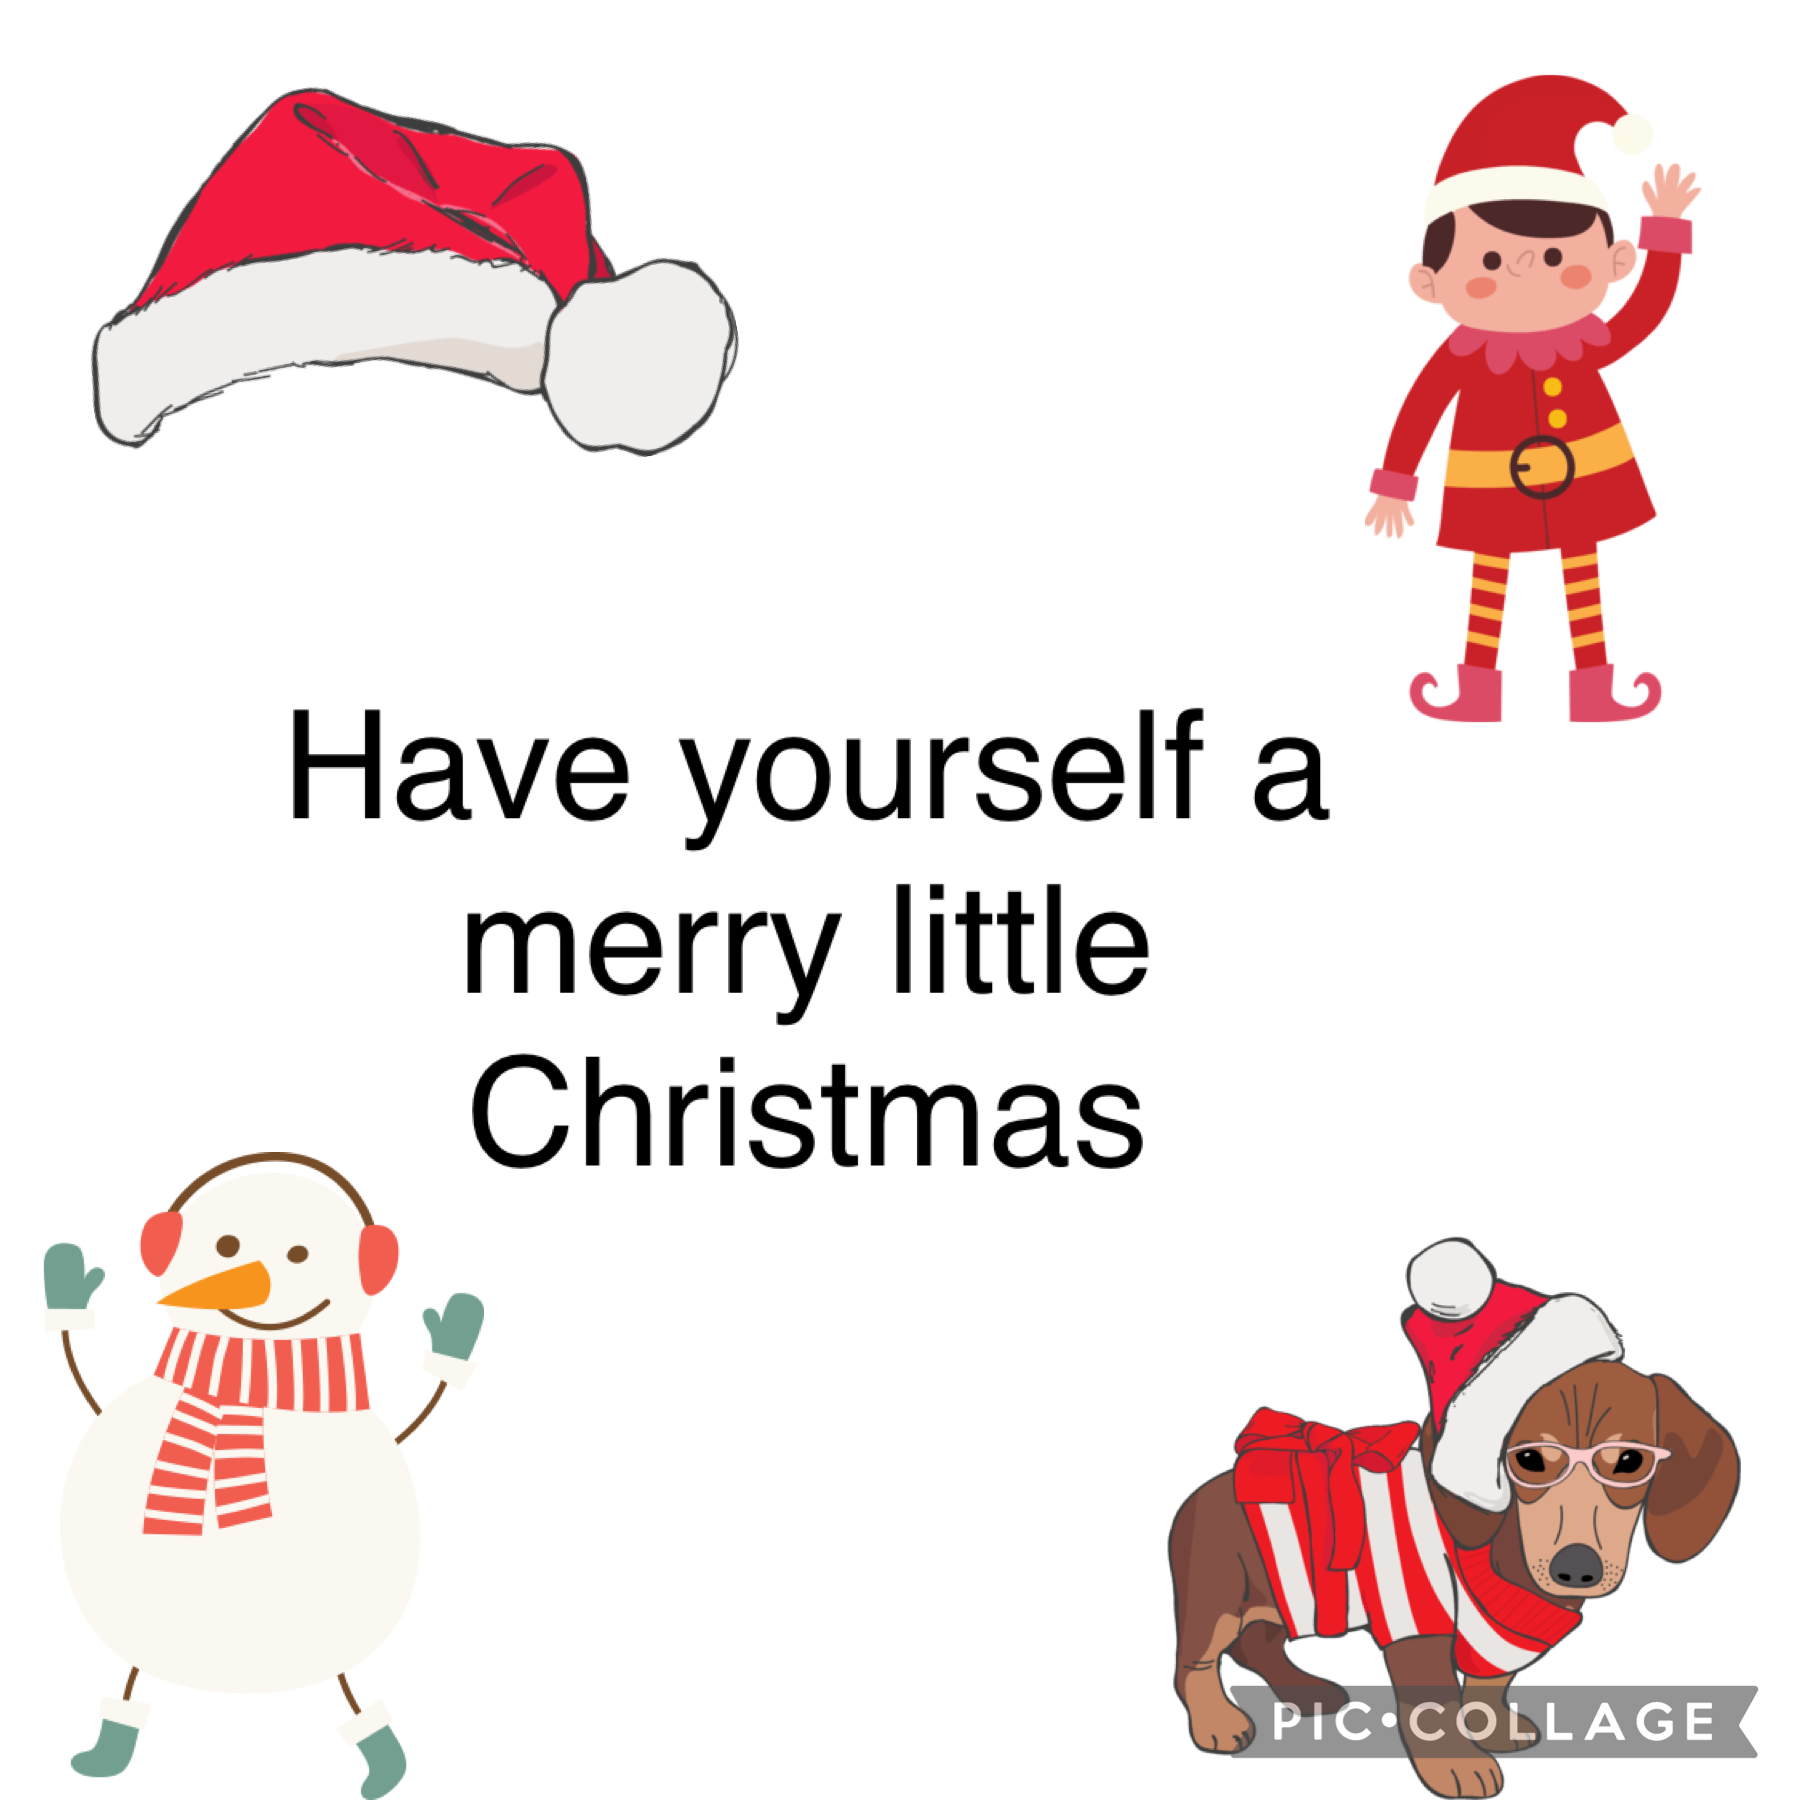 Merry Christmas 